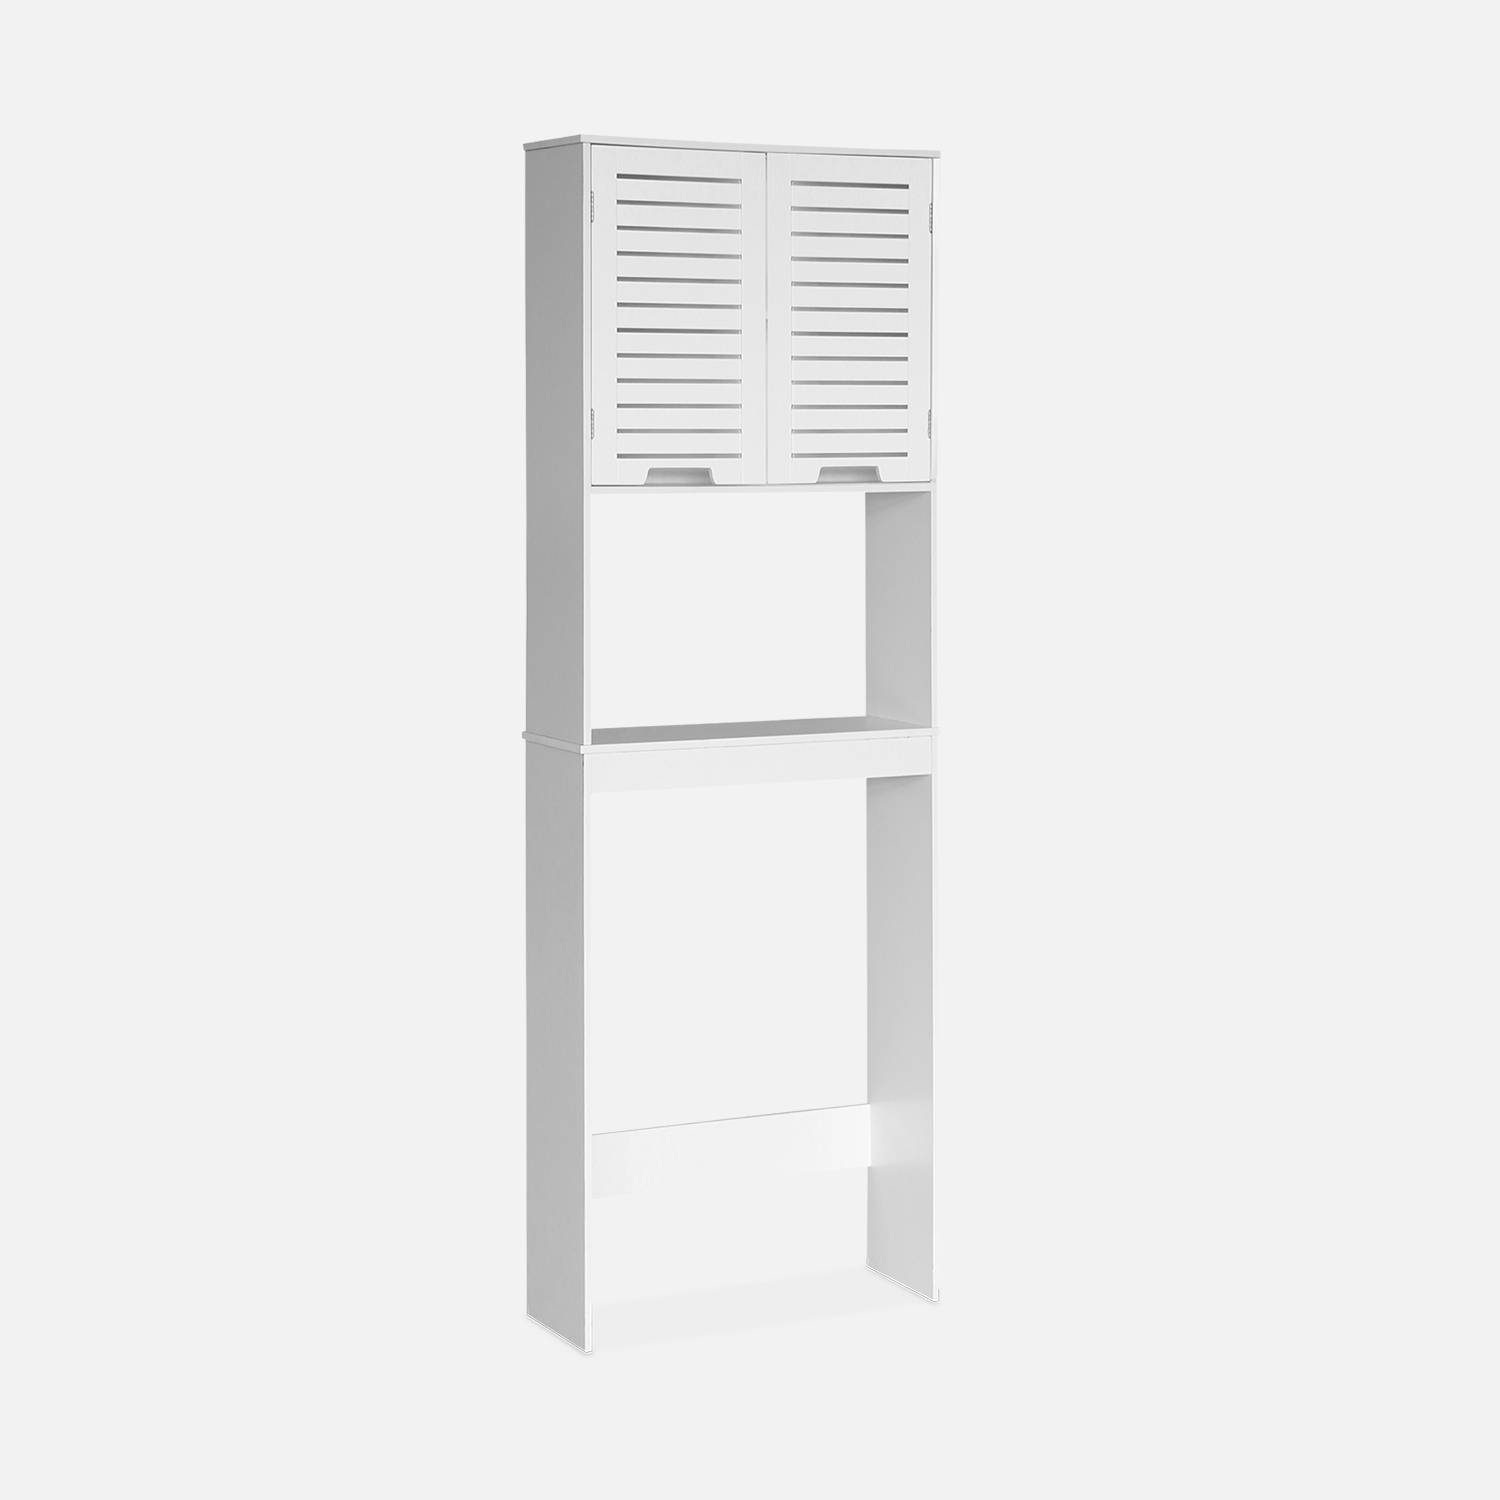 WC shelf/cabinet, bathroom furniture, white Photo1